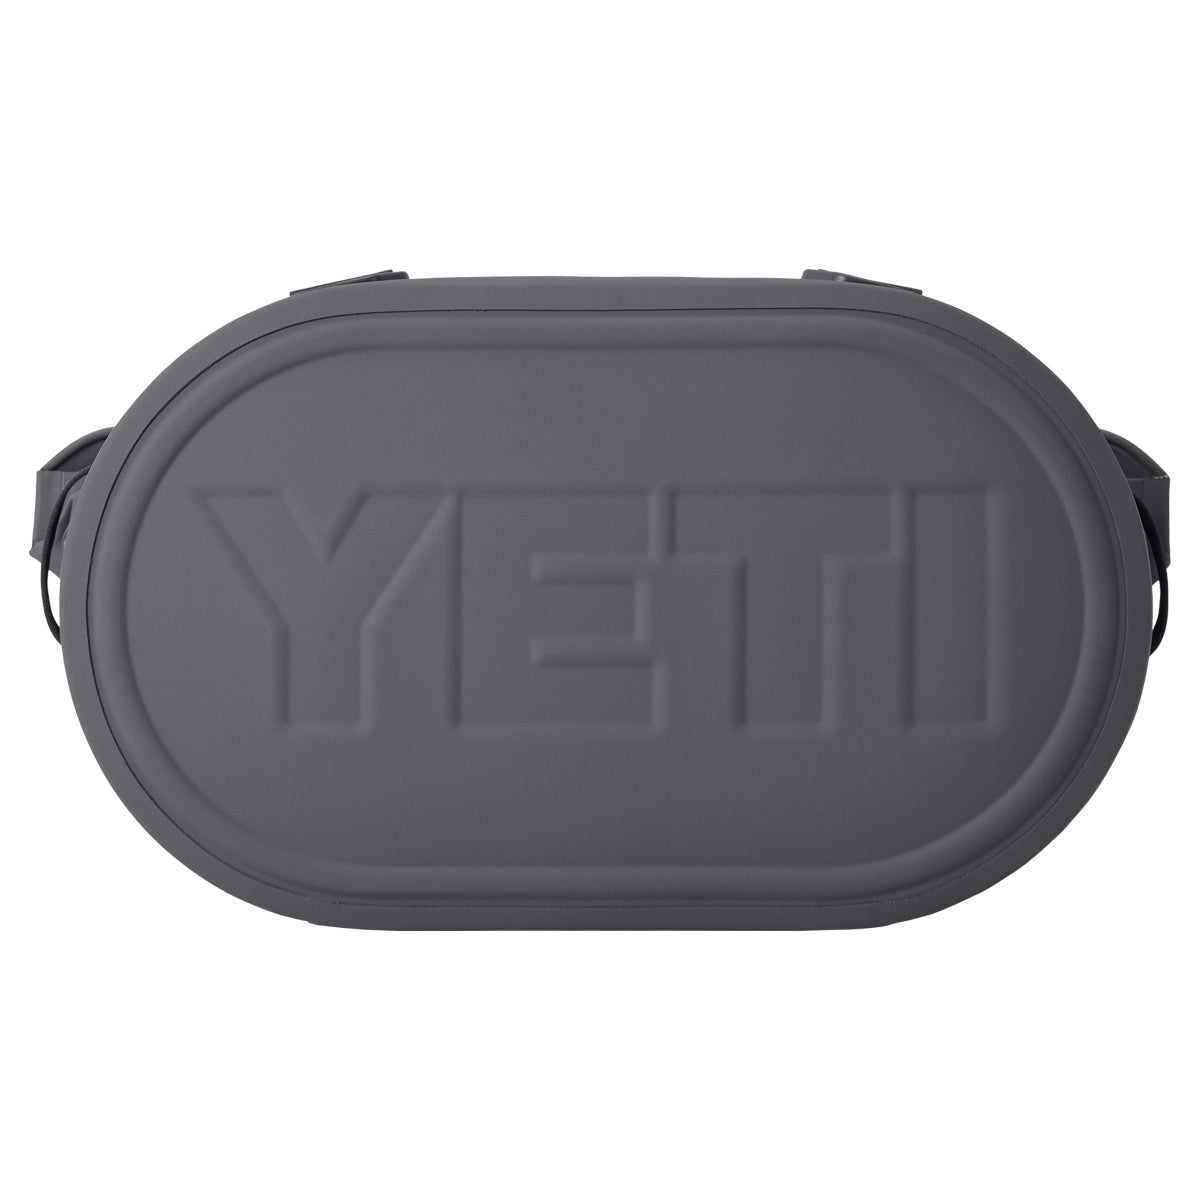 YETI M-30 Hopper Soft Cooler 2.0 in  by GOHUNT | Yeti - GOHUNT Shop